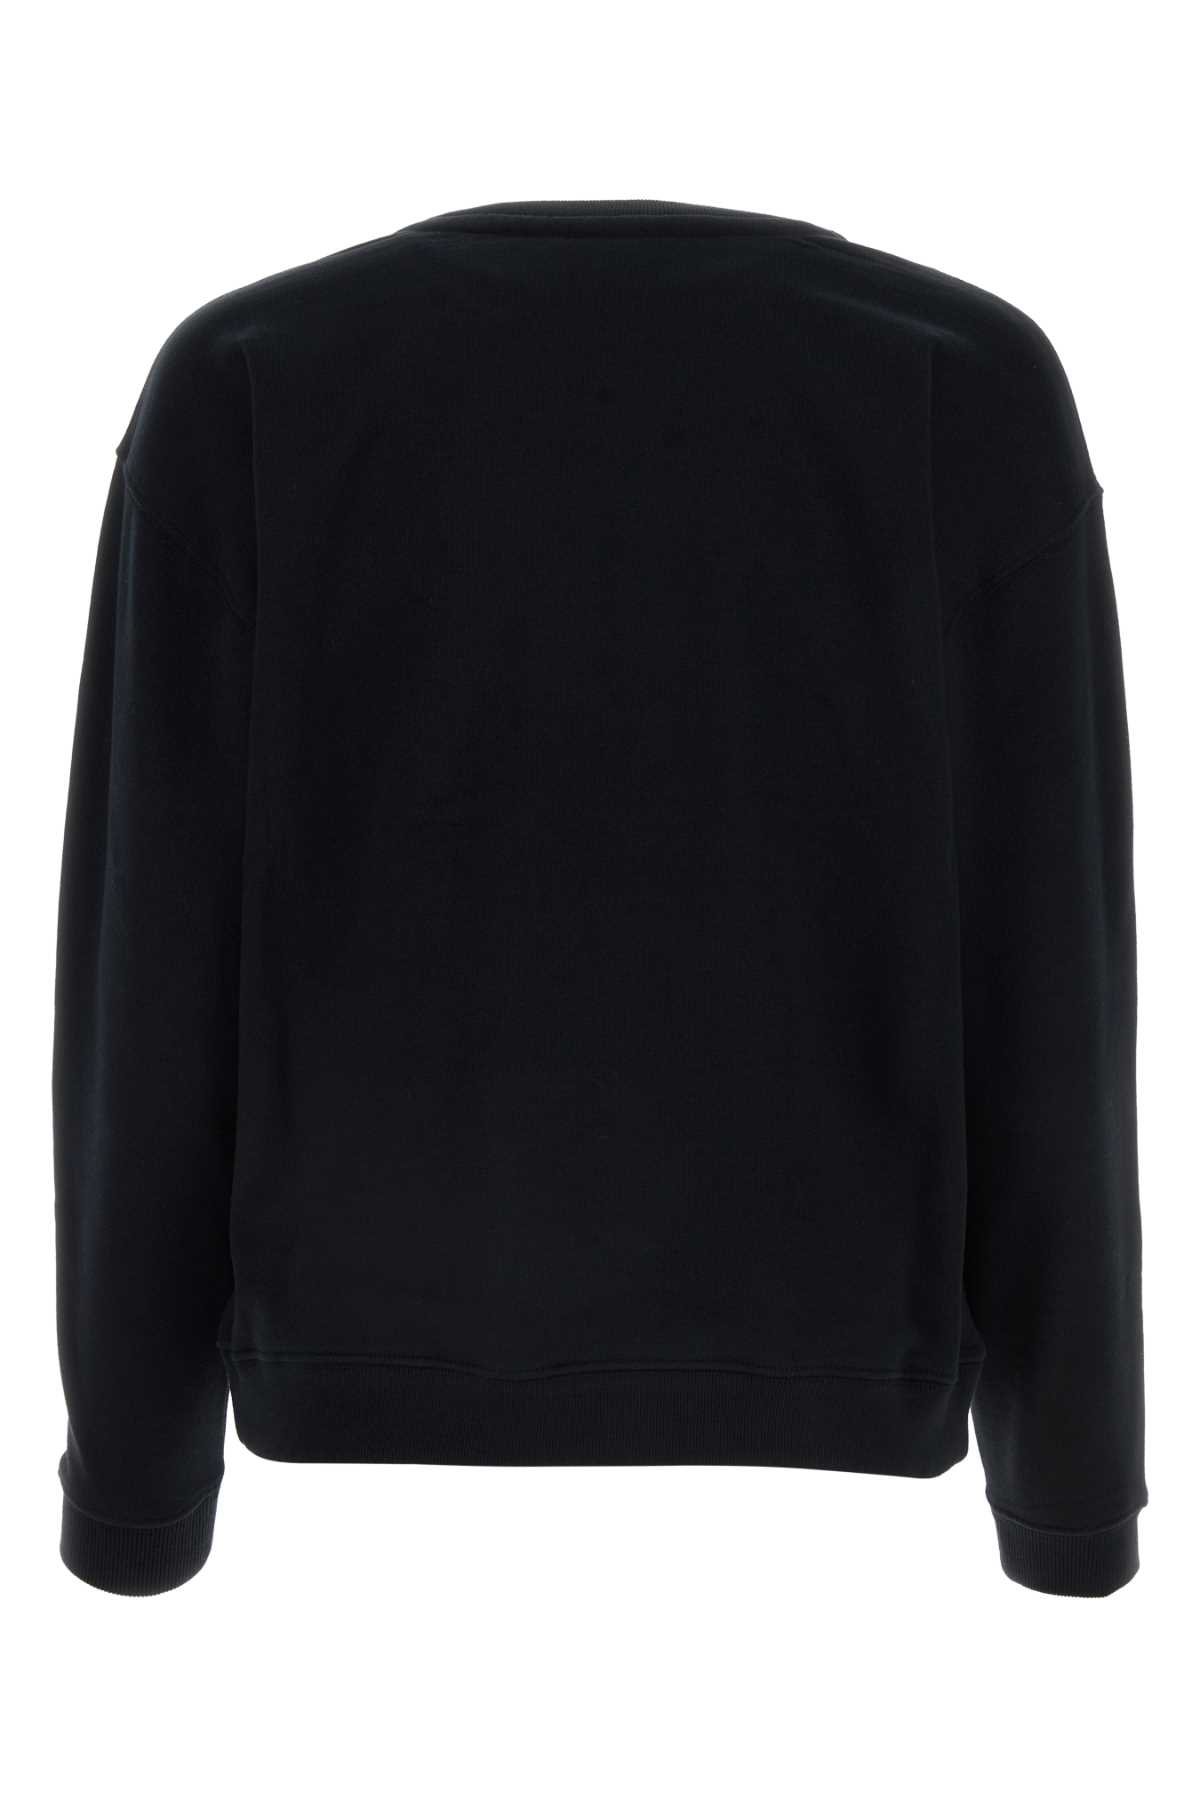 Kenzo Midnight Blue Cotton Sweatshirt In Black